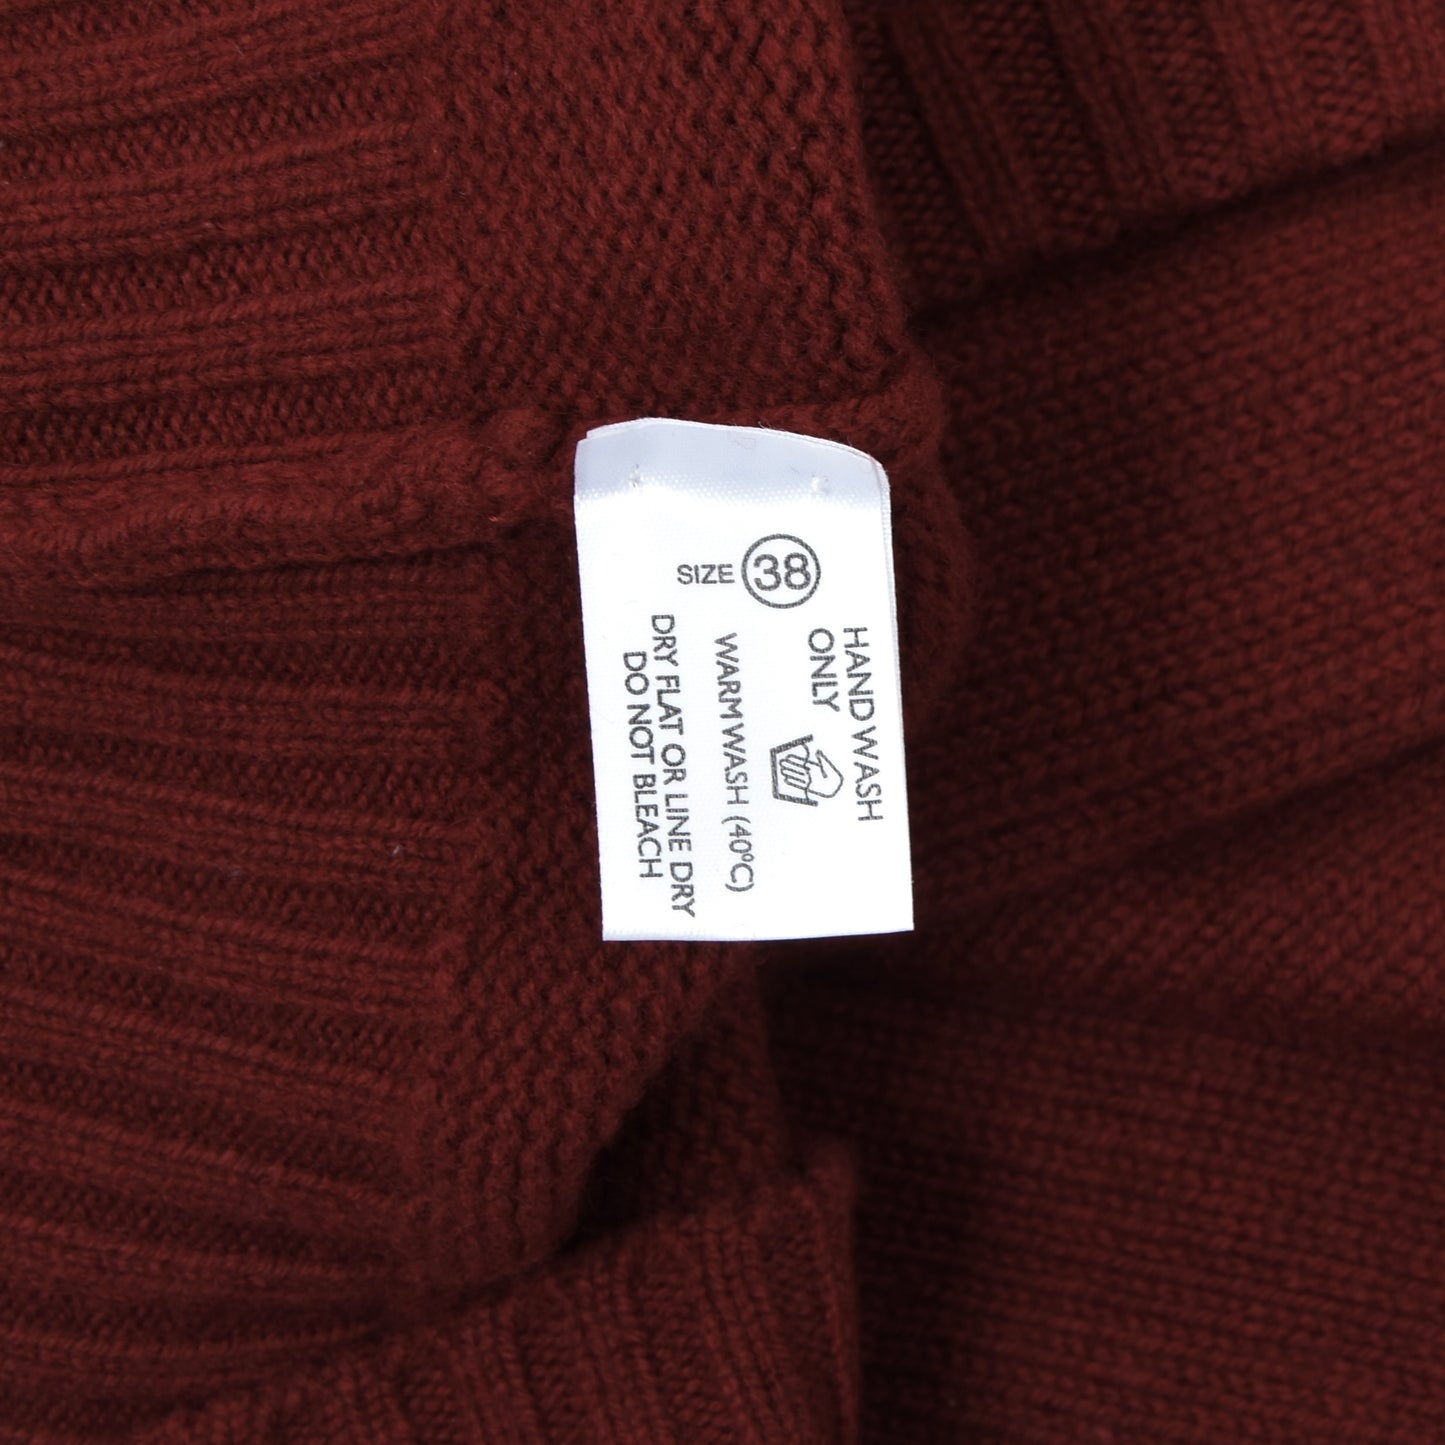 Peter Scott 100% Wool Cardigan Sweater Size 38 Chest ca. 52.5cm - Rust Red